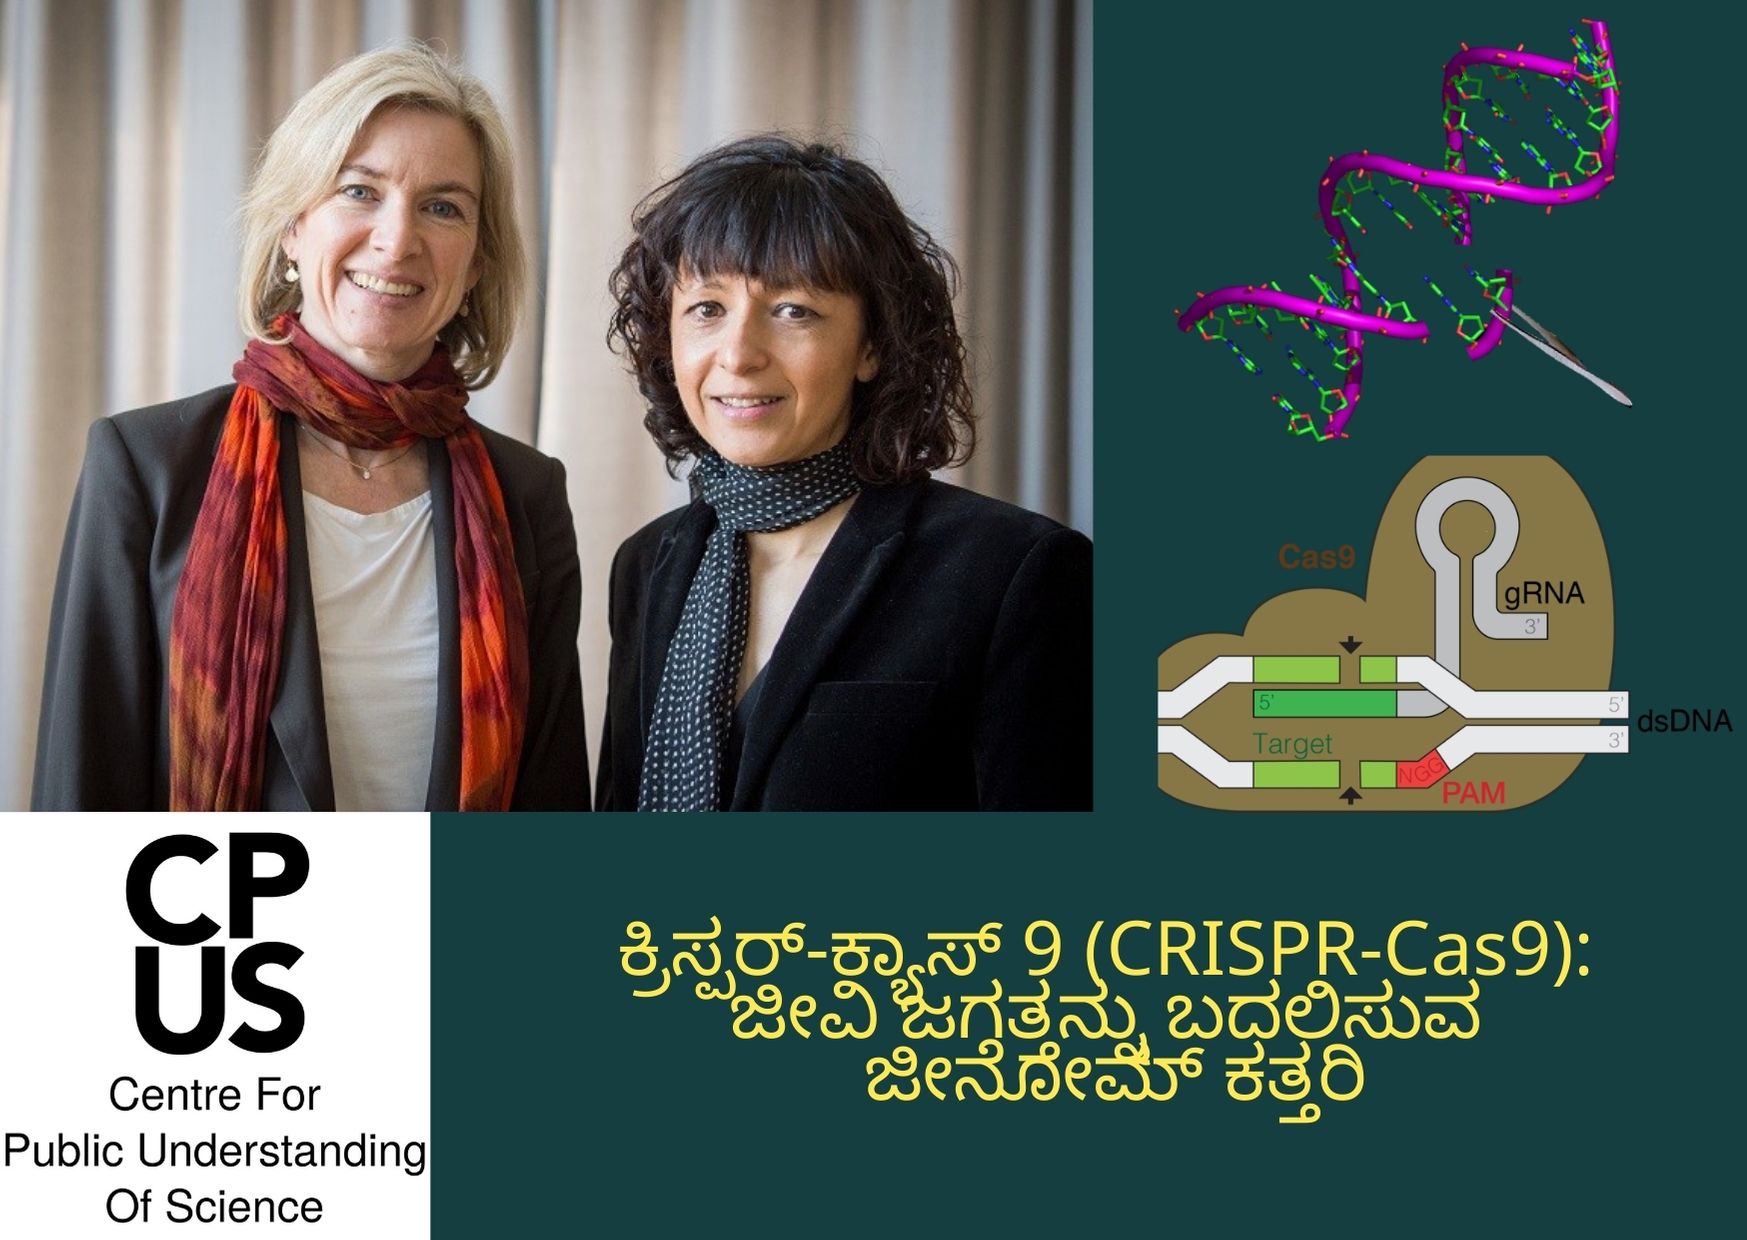 You are currently viewing ಕ್ರಿಸ್ಪರ್-ಕ್ಯಾಸ್ 9 (CRISPR-Cas9): ಜೀವಿ ಜಗತ್ತನ್ನು ಬದಲಿಸುವ ಜೀನೋಮ್ ಕತ್ತರಿ